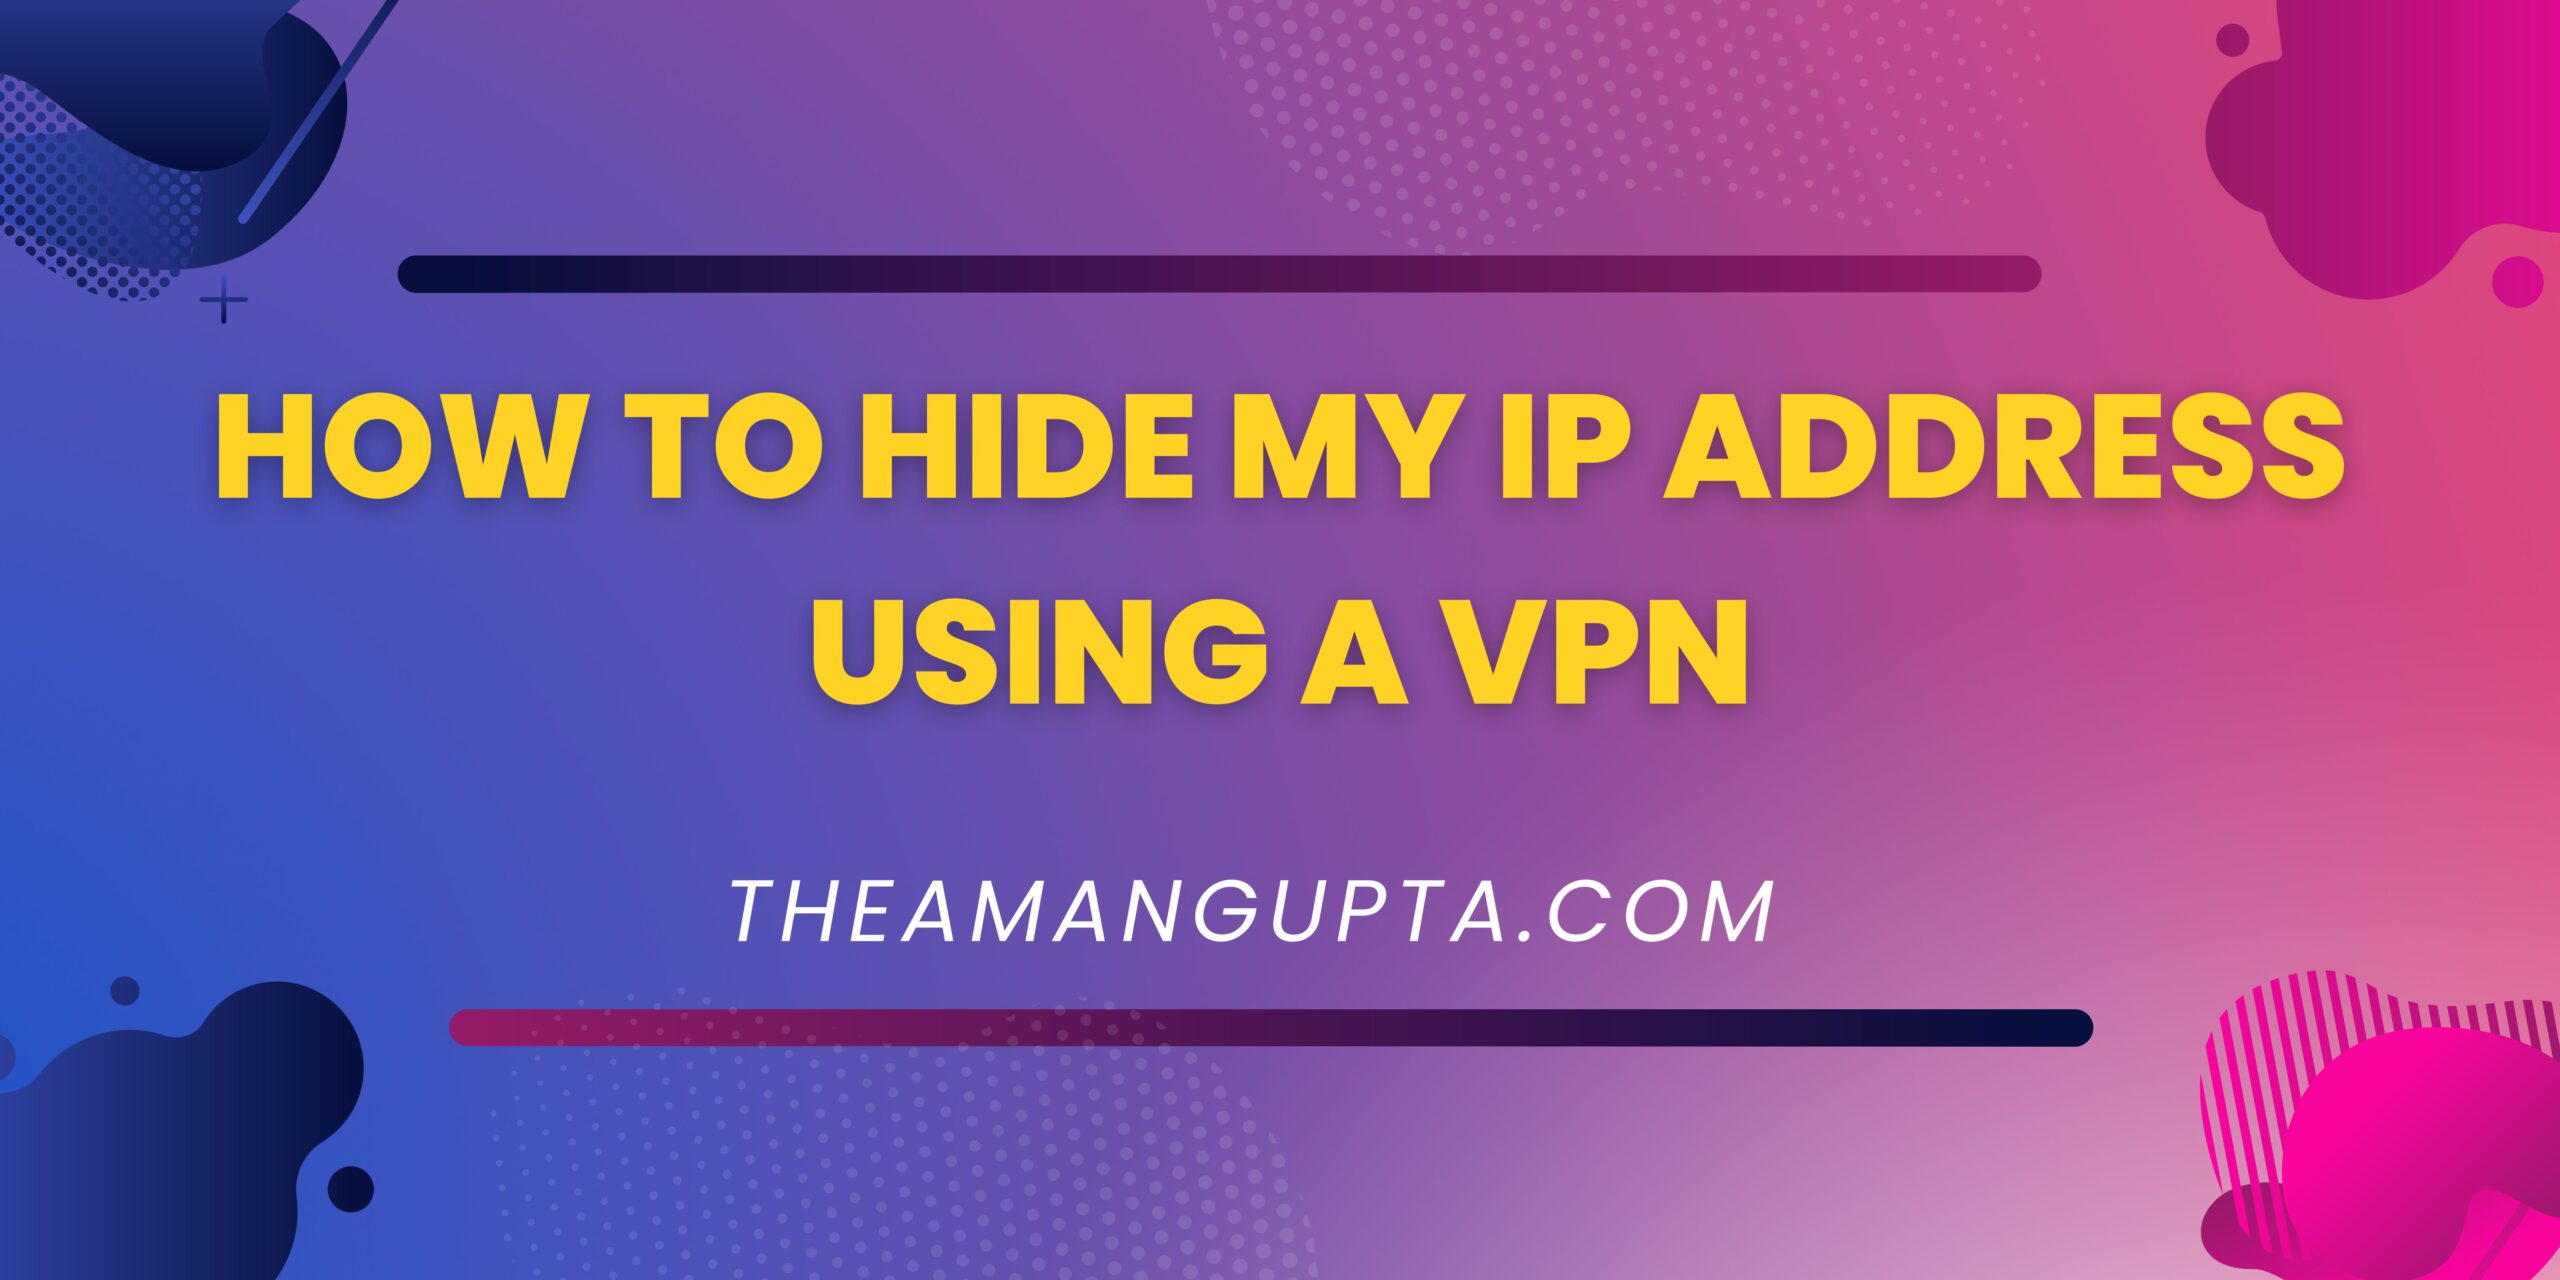 How To Hide My IP Address Using A VPN|Hide IP Address|Theamangupta|Theamangupta